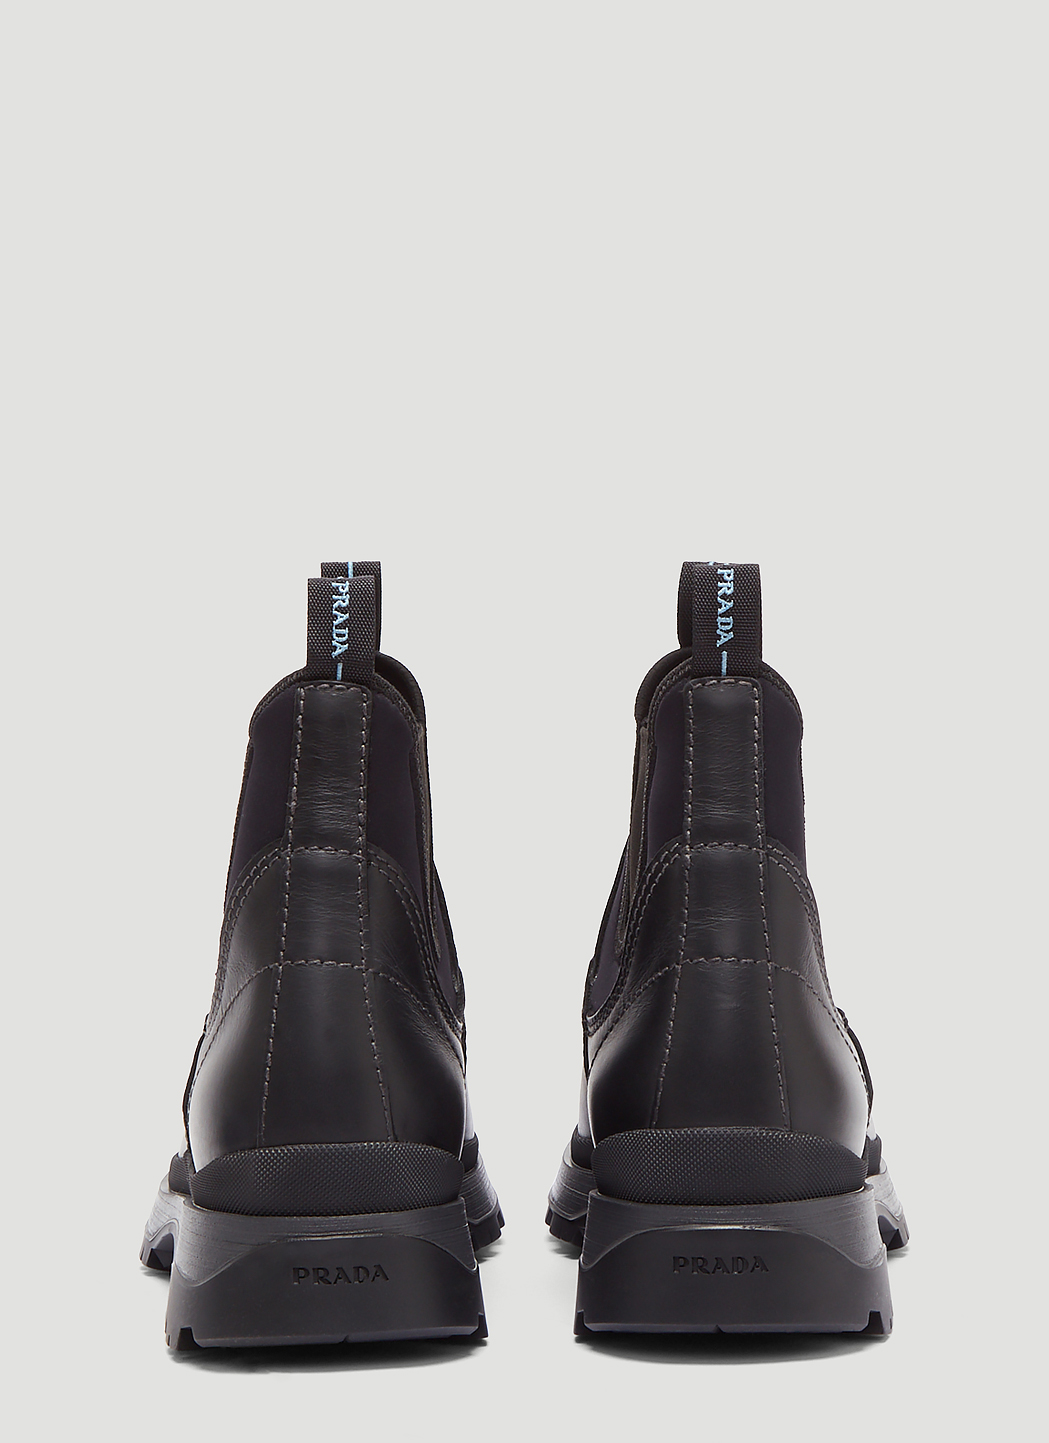 Prada Rodeo Neoprene Chelsea Boots in Black | LN-CC